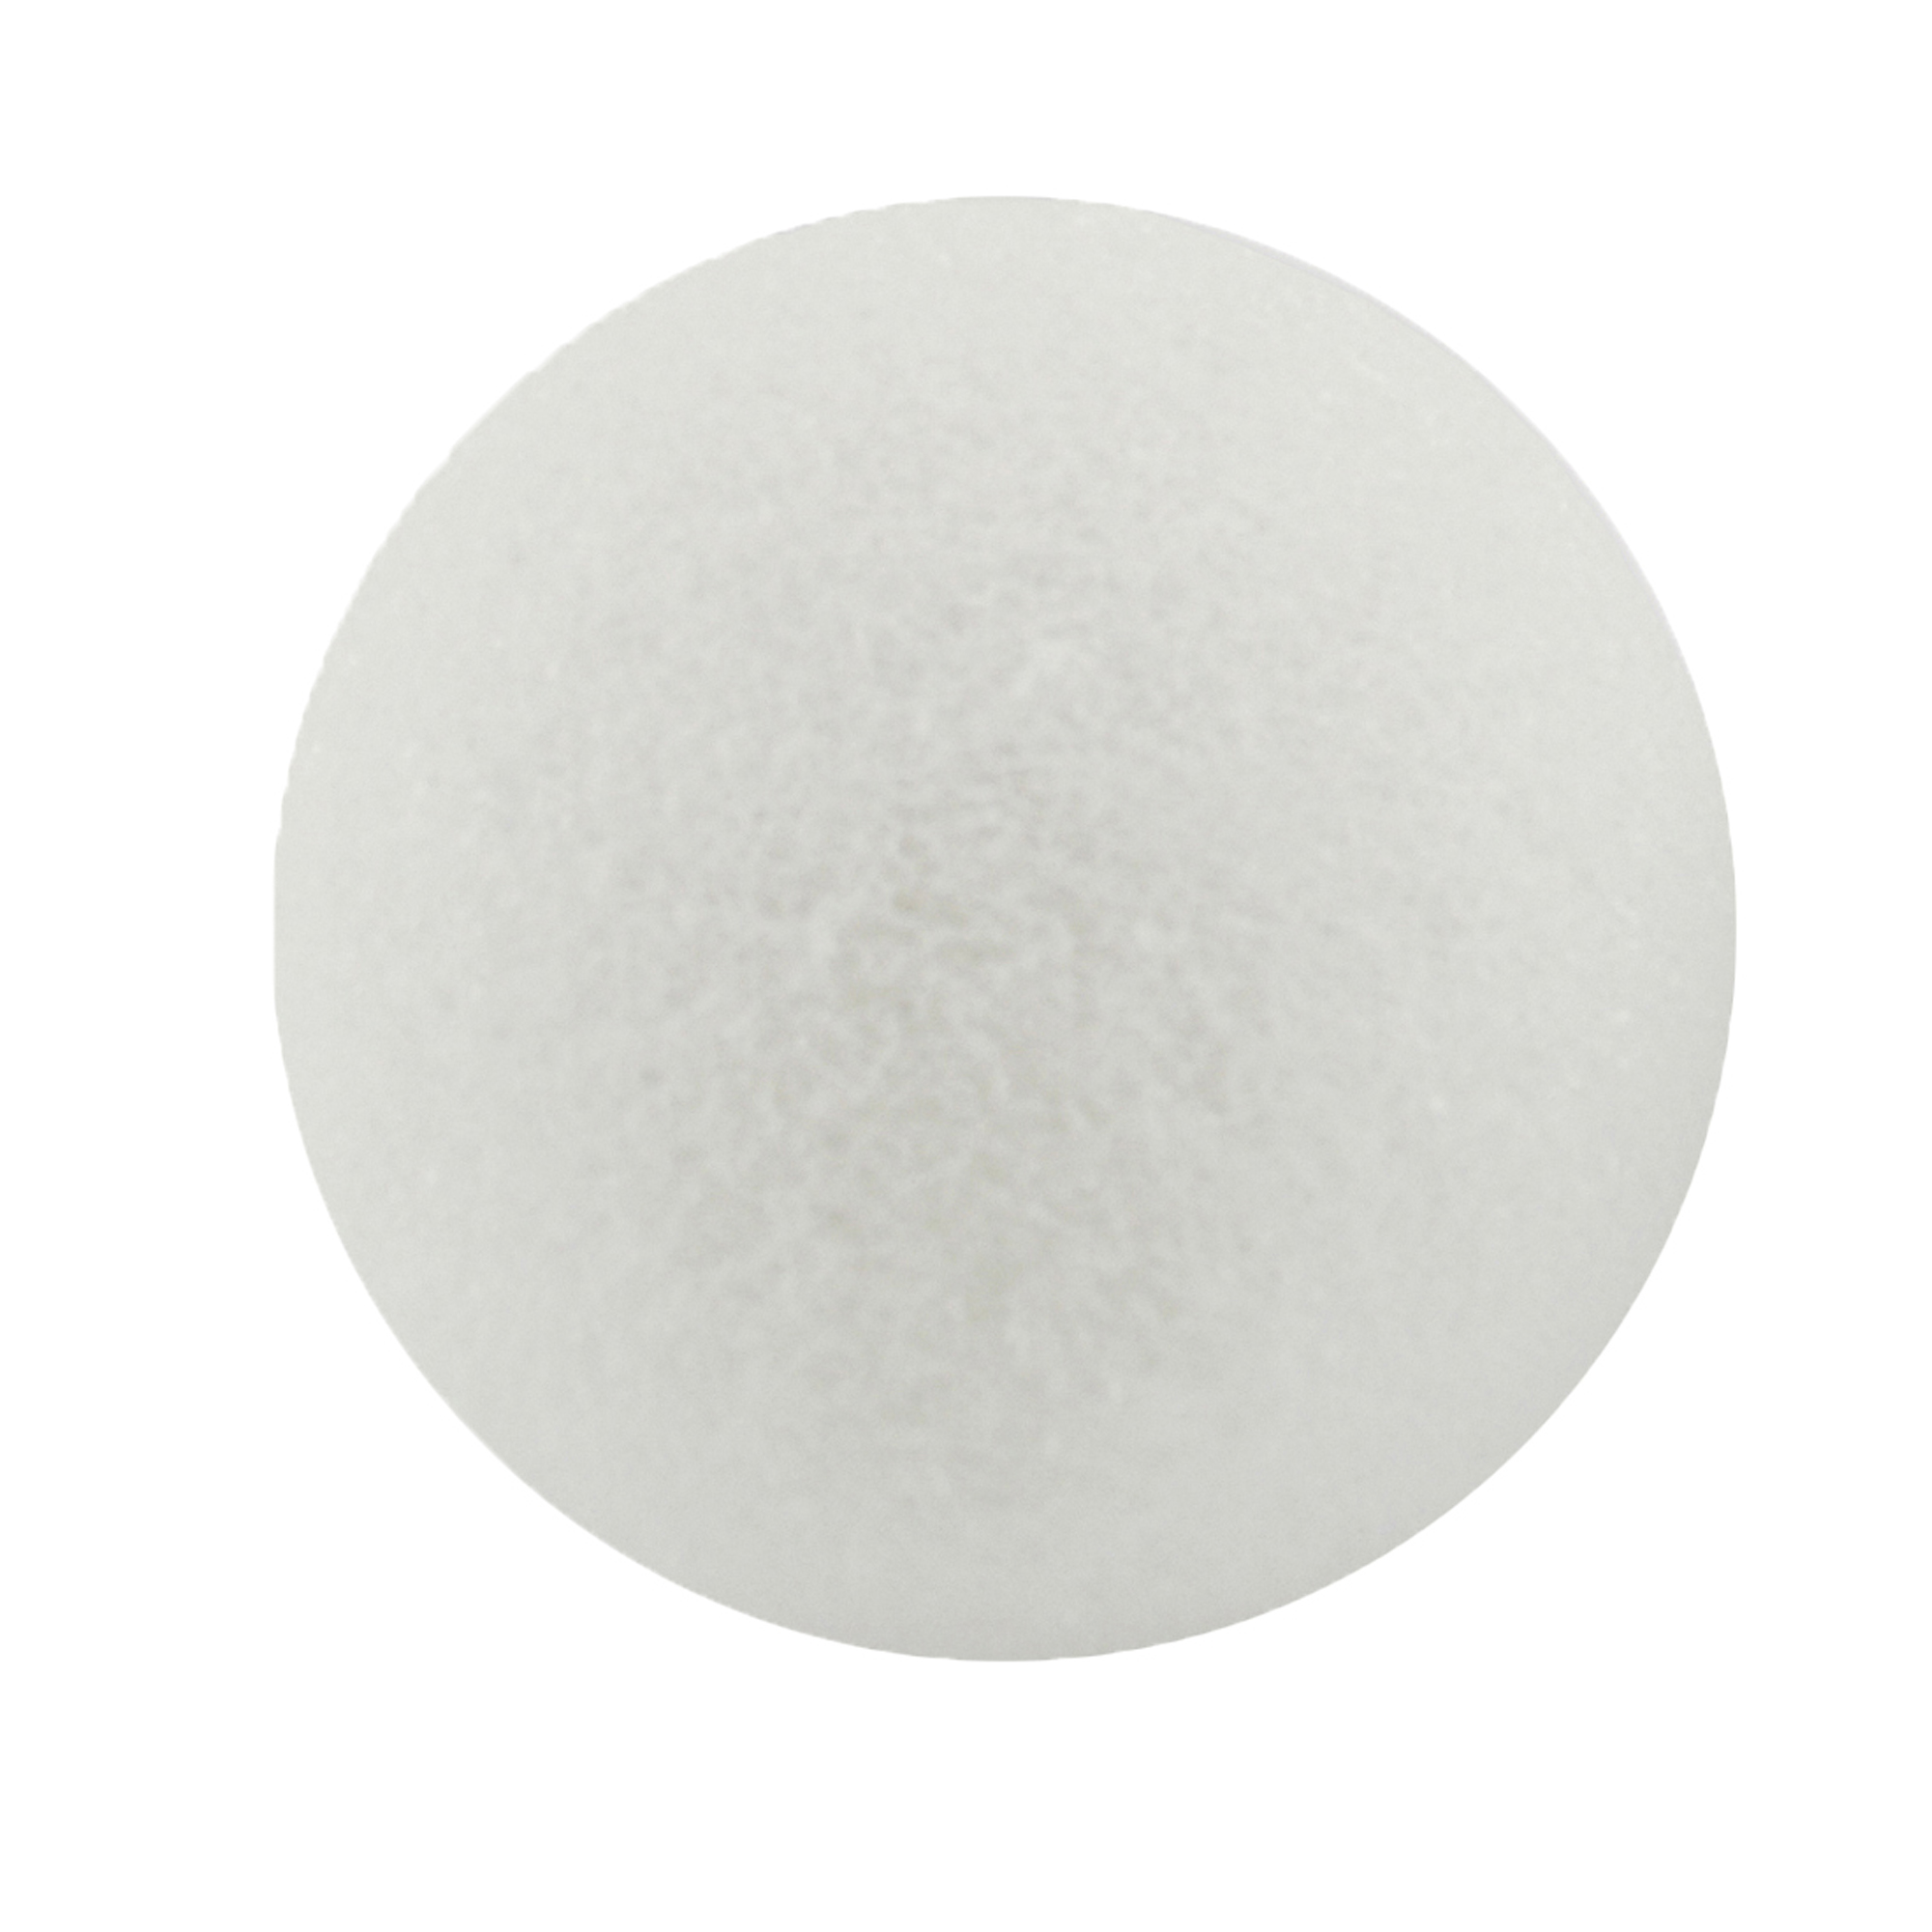 Styrofoam Balls, 4 Inch, 12 Per Pack - HYG51104, Hygloss Products Inc.